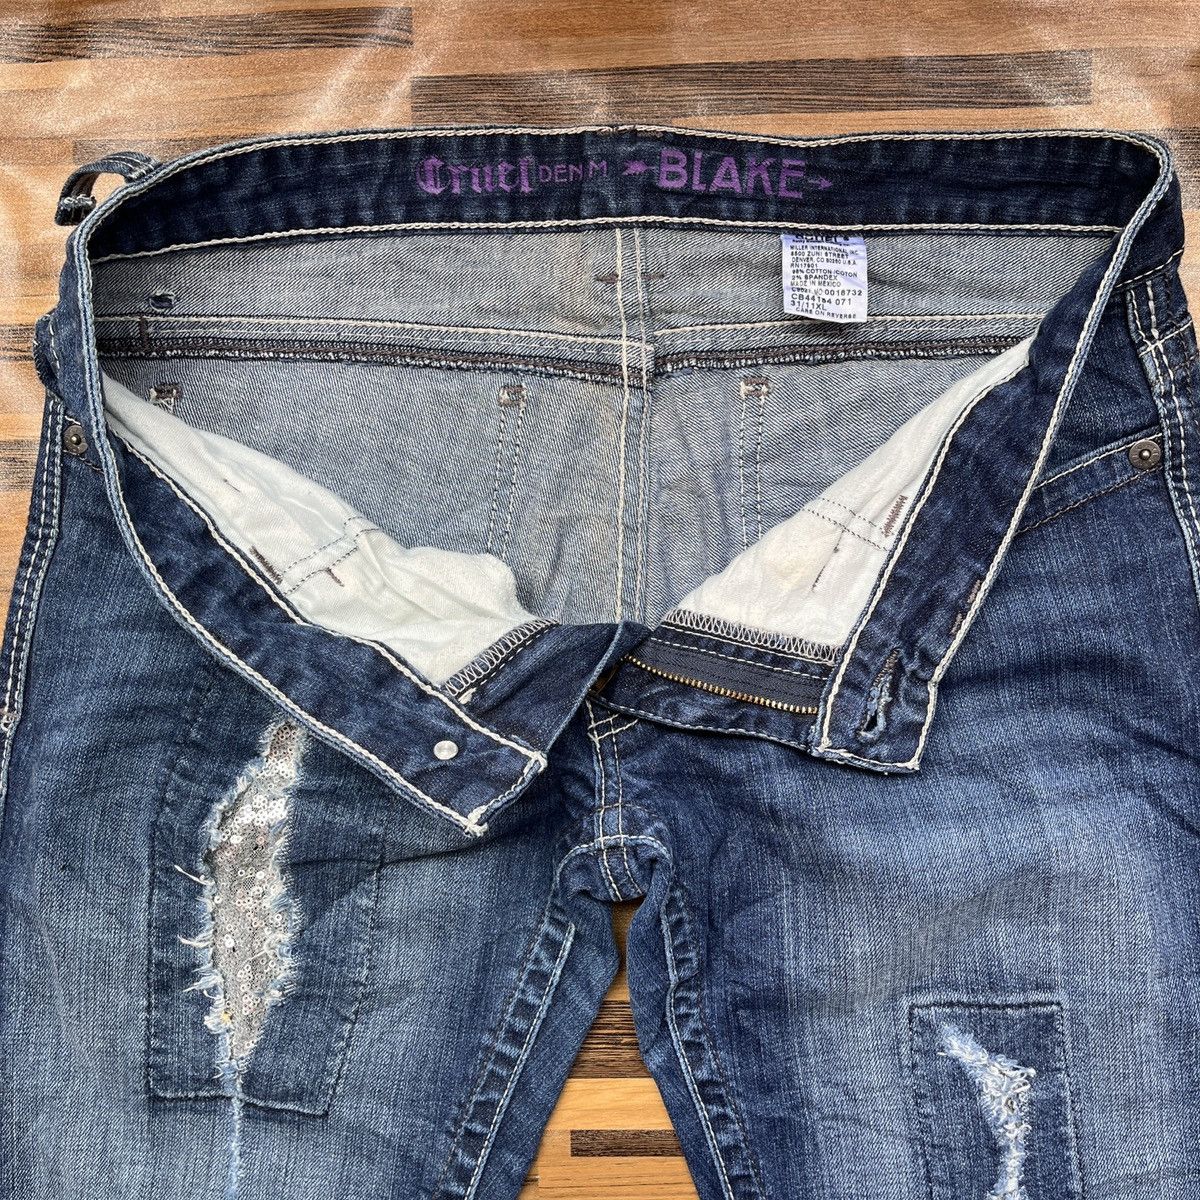 Vintage - Cruel Denim Blake Rocky Mountain Jeans Distressed - 14